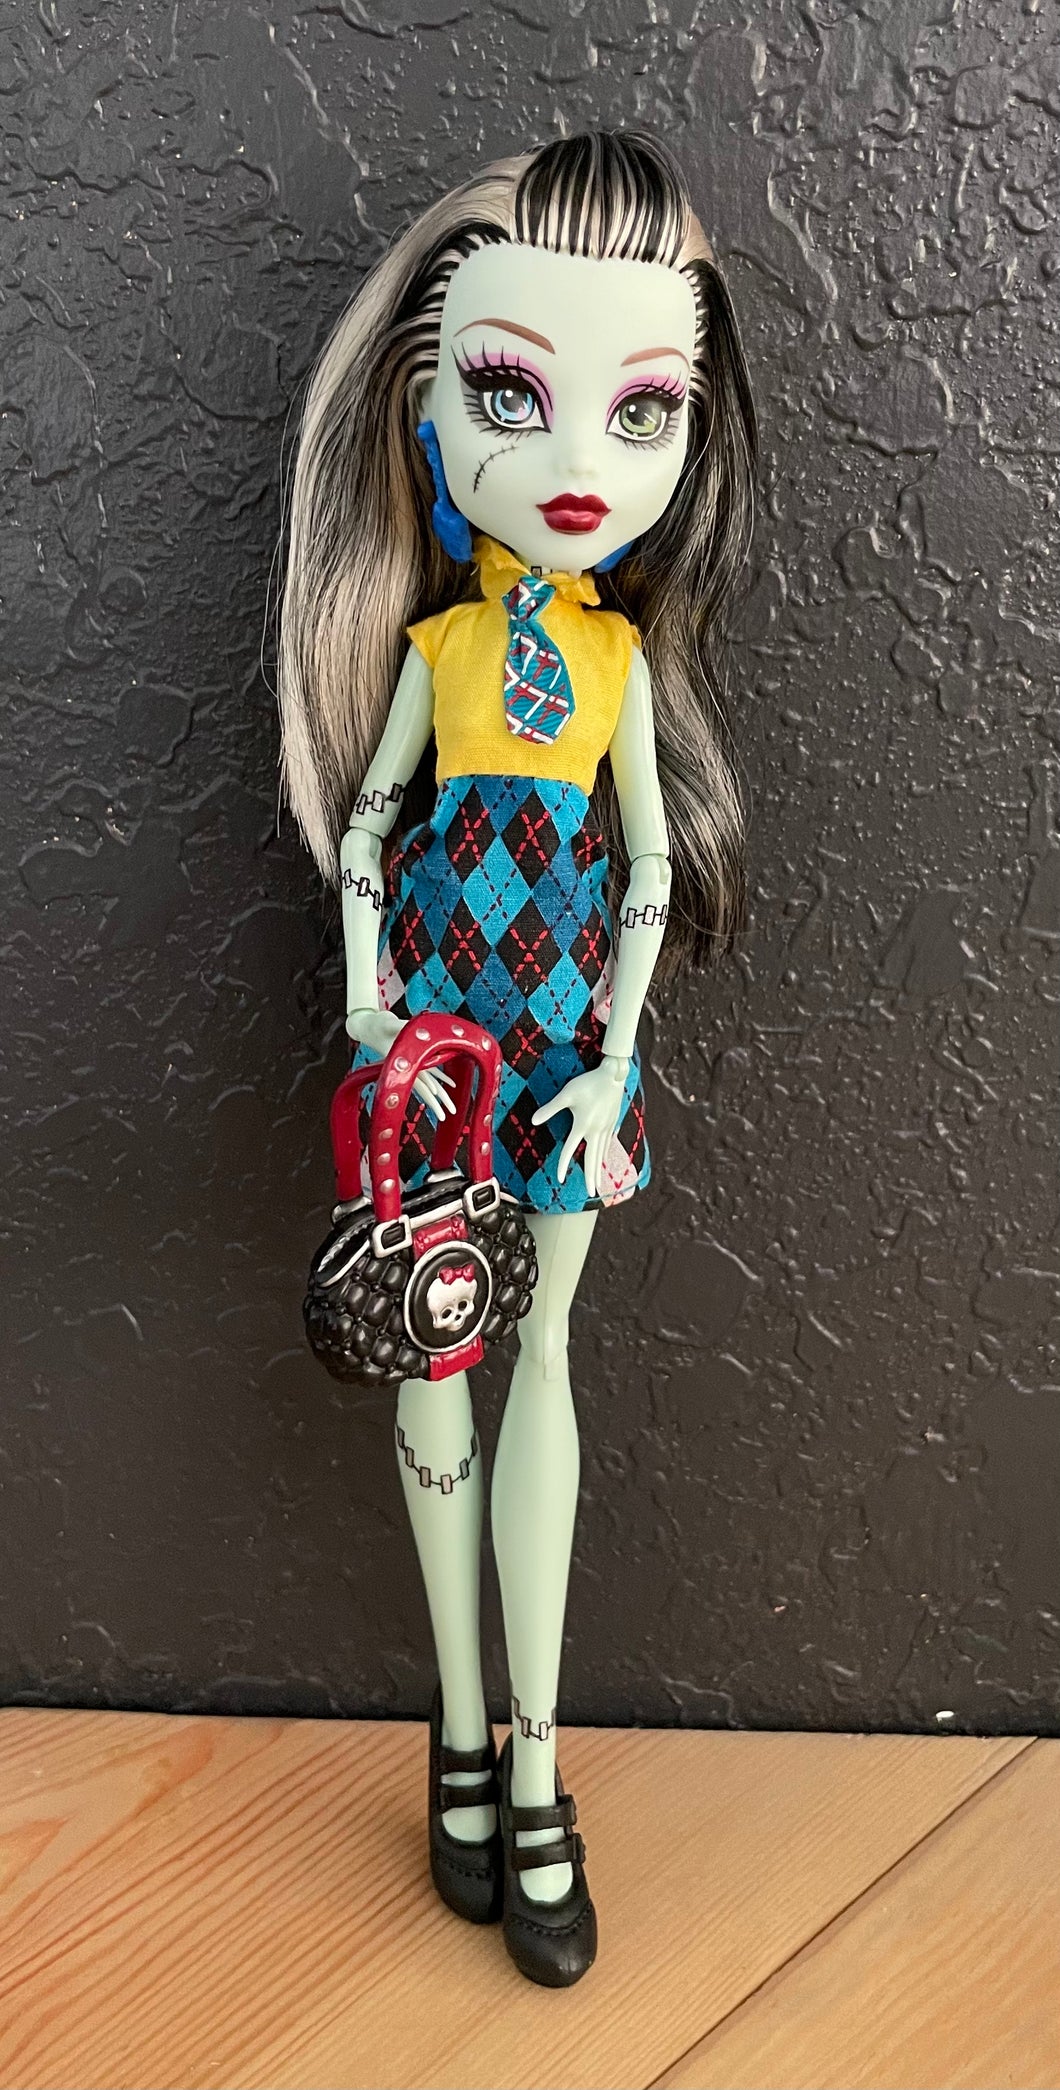 Mattel Monster High Frankie Stein Doll